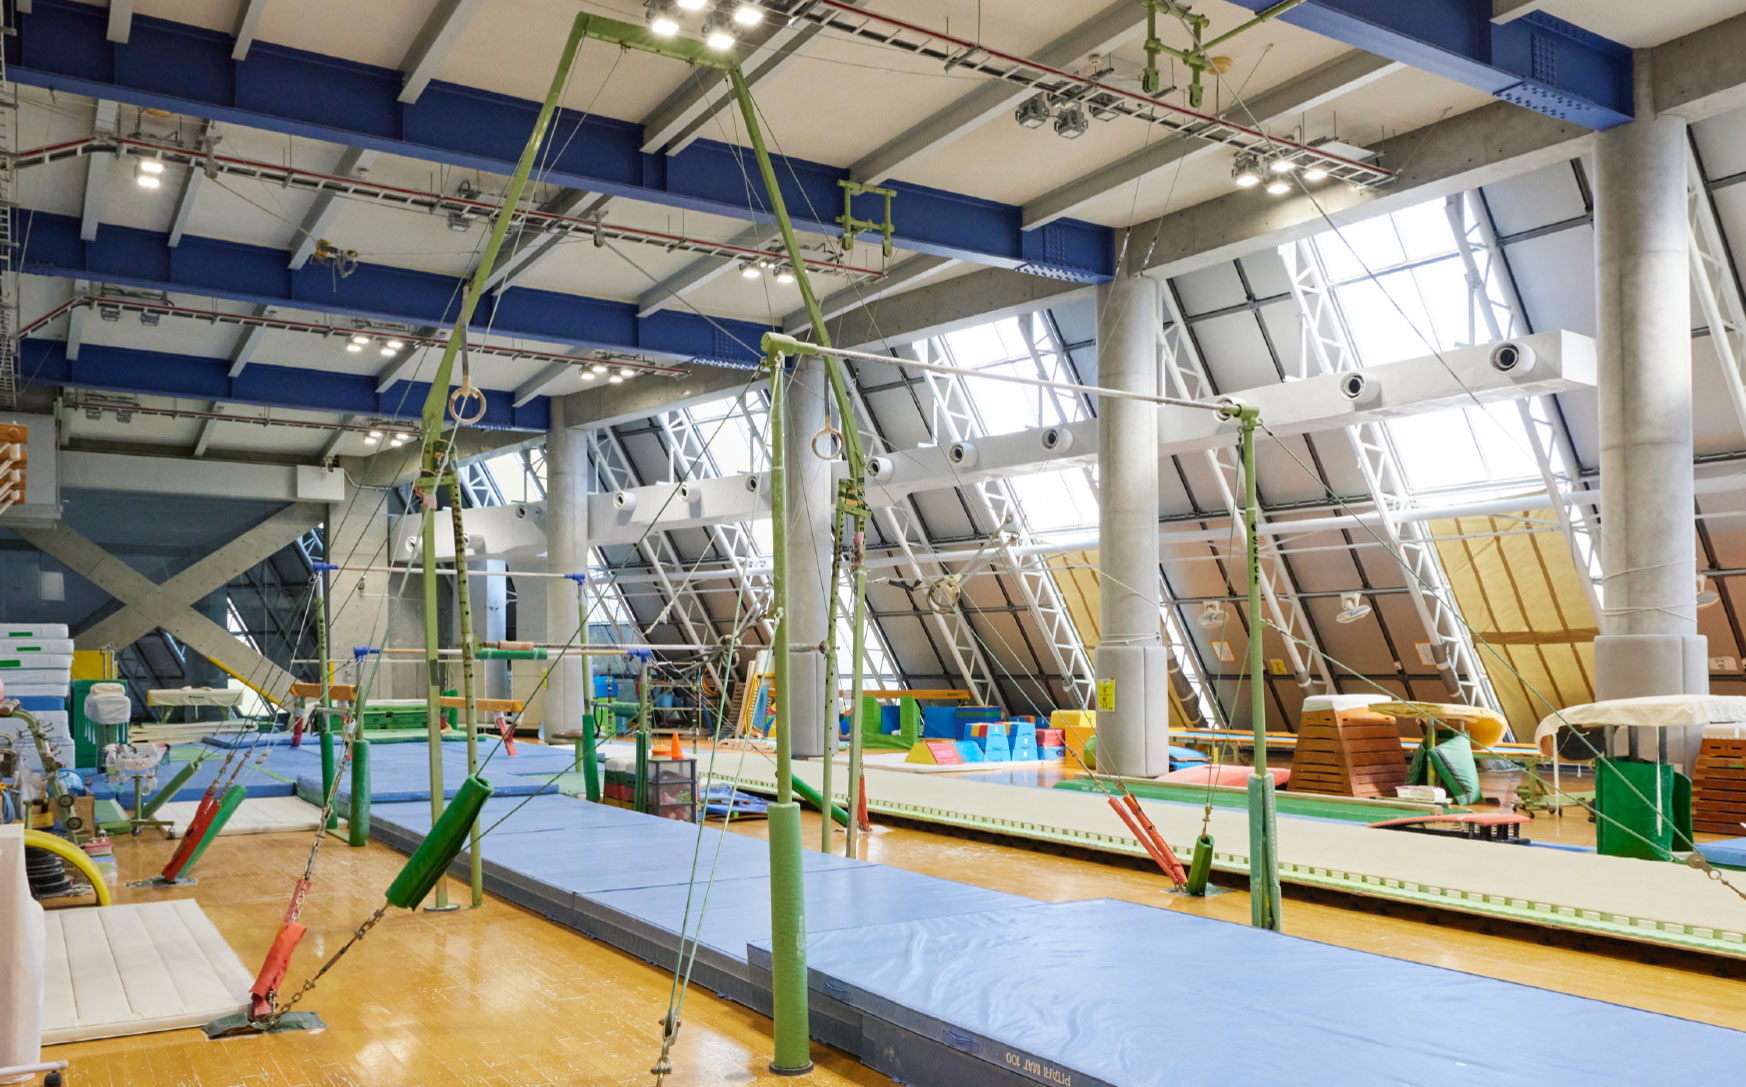 Gymnastics hall